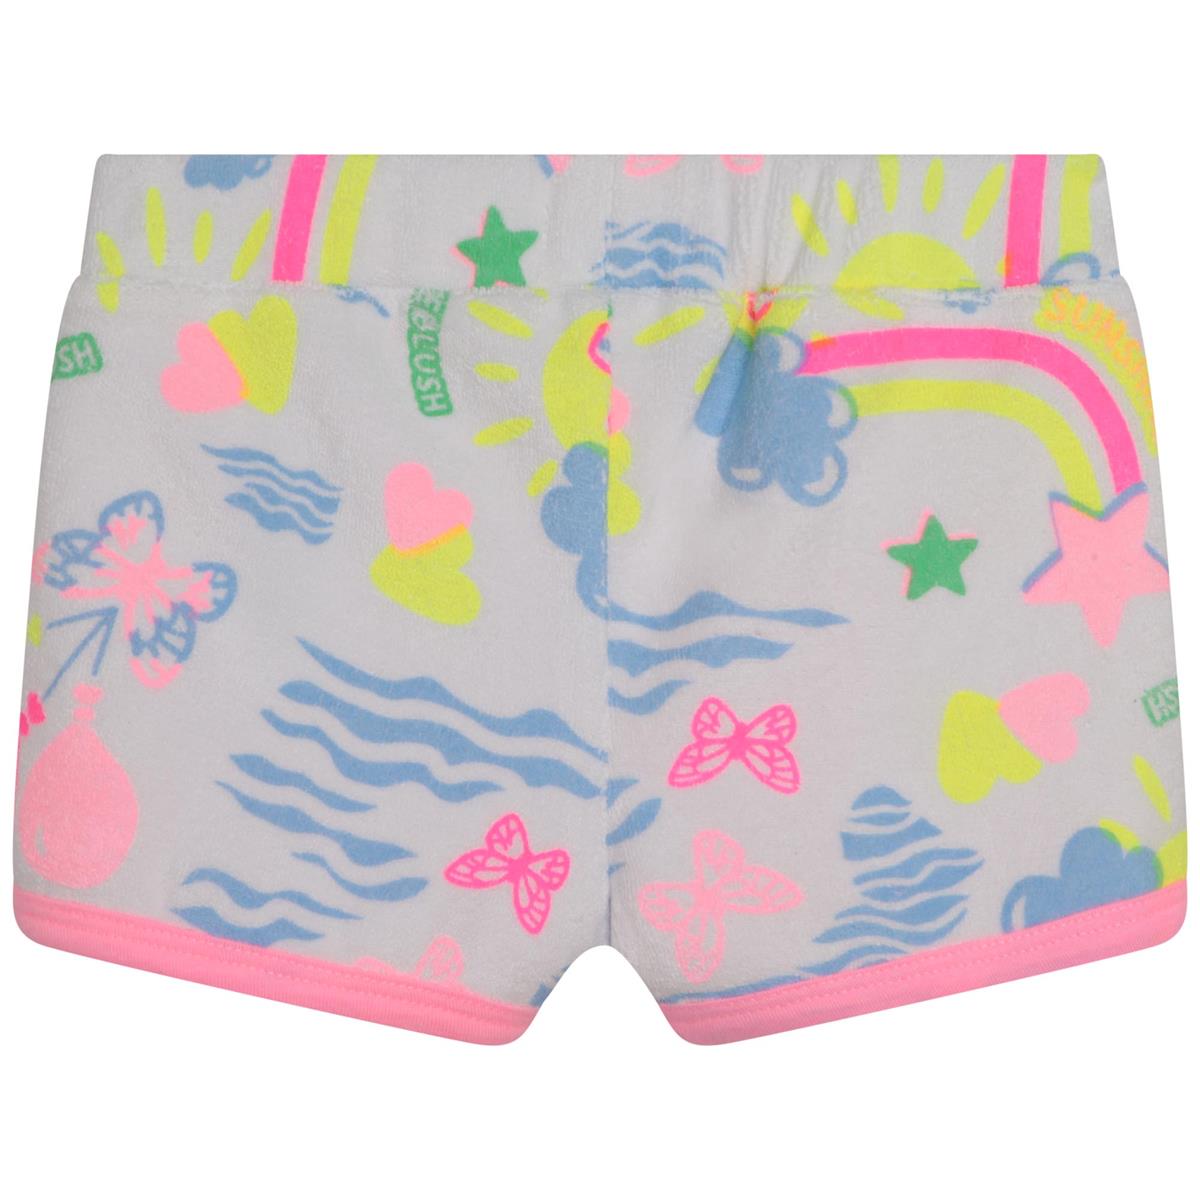 Baby Girls Pink Printed Shorts